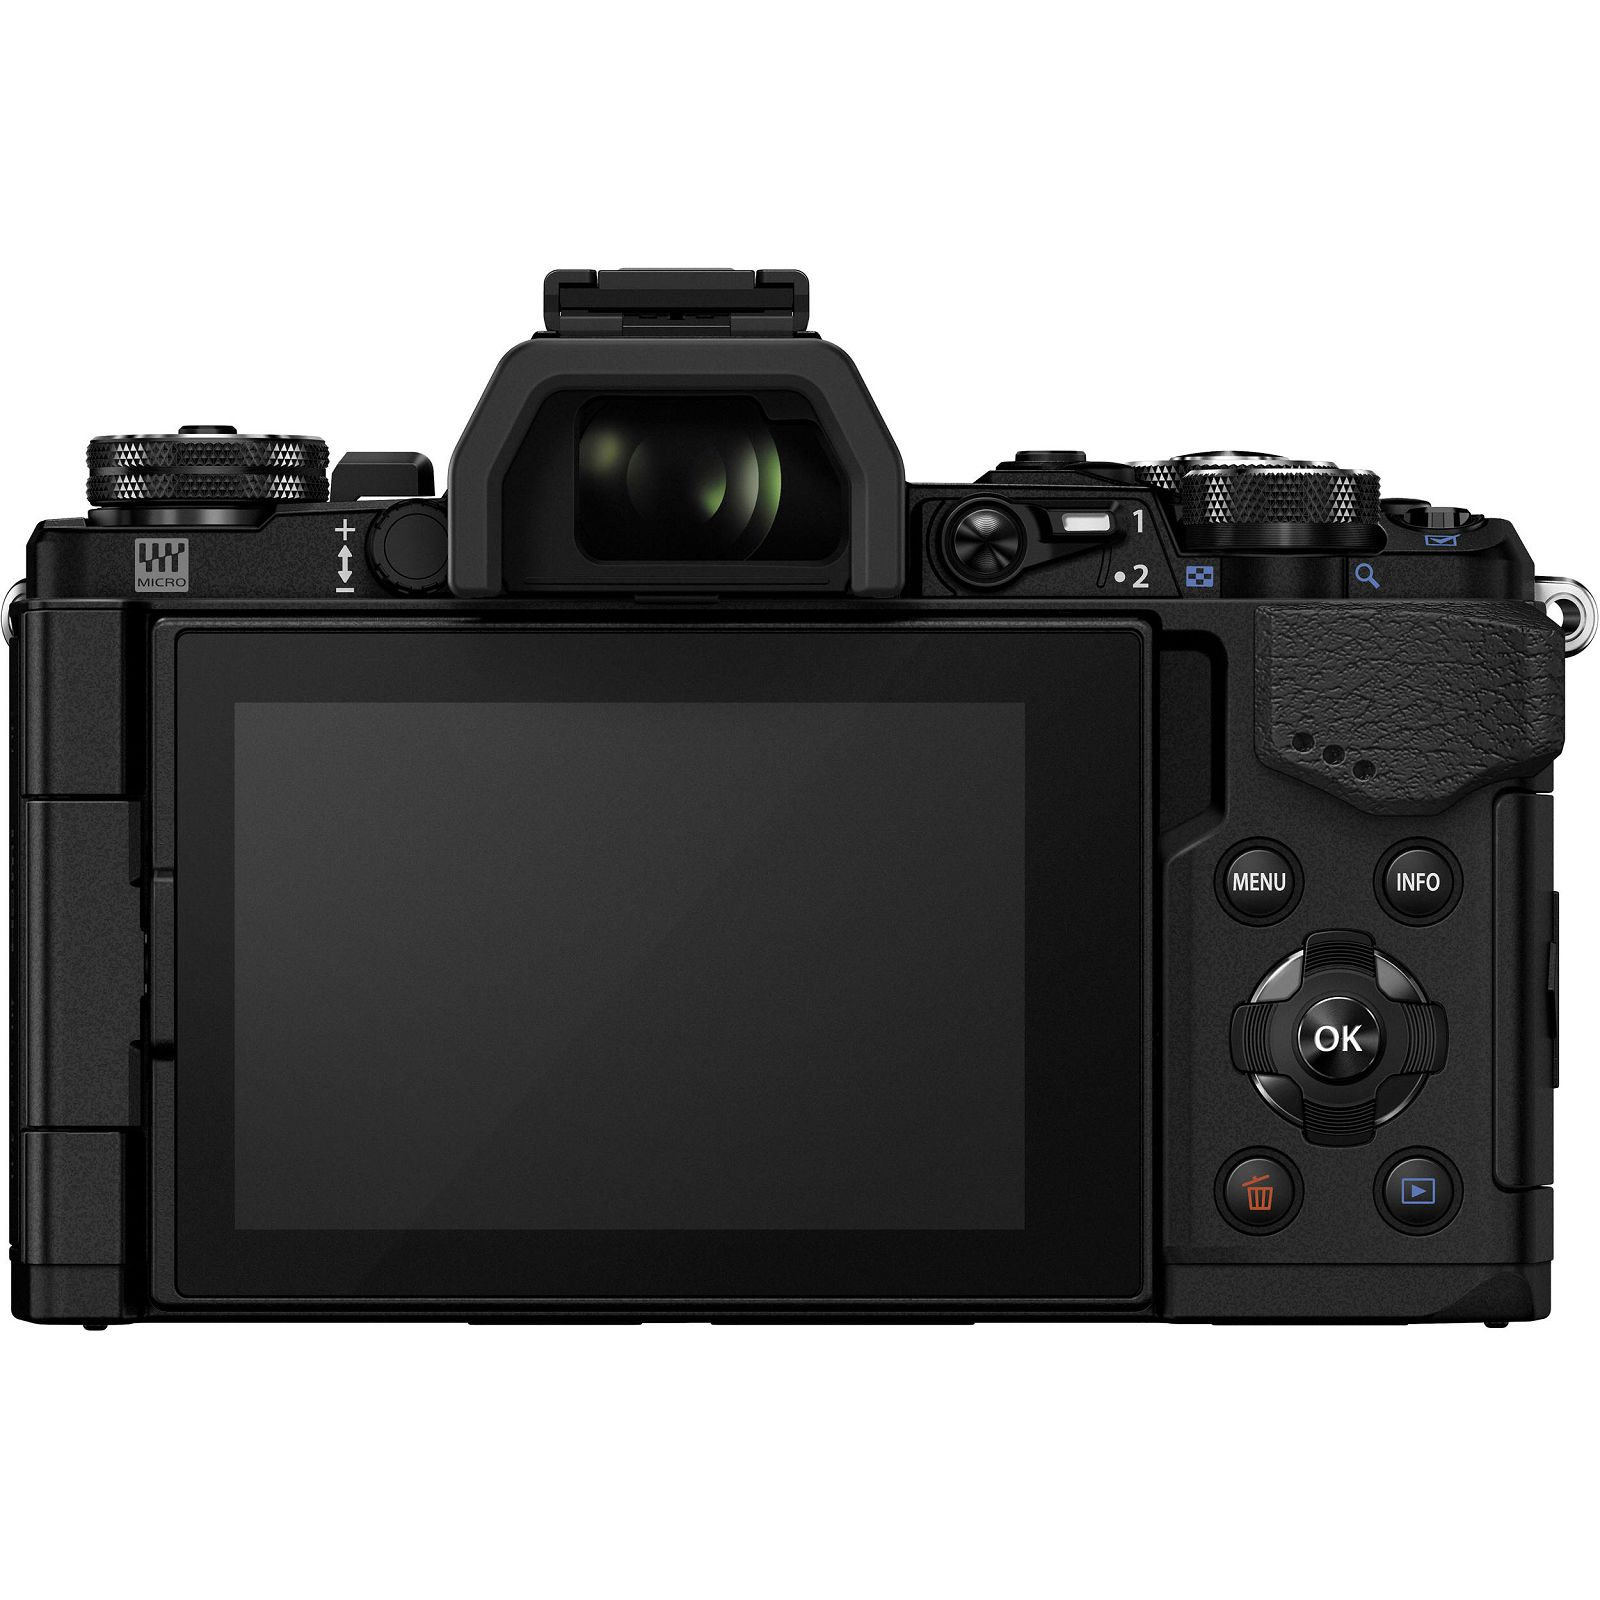 Olympus E-M5 II Body Black crni OM-D digitalni fotoaparat E-M5II Camera incl. Charger & Battery Micro Four Thirds MFT V207040BE000 - OLYMPUS BONUS